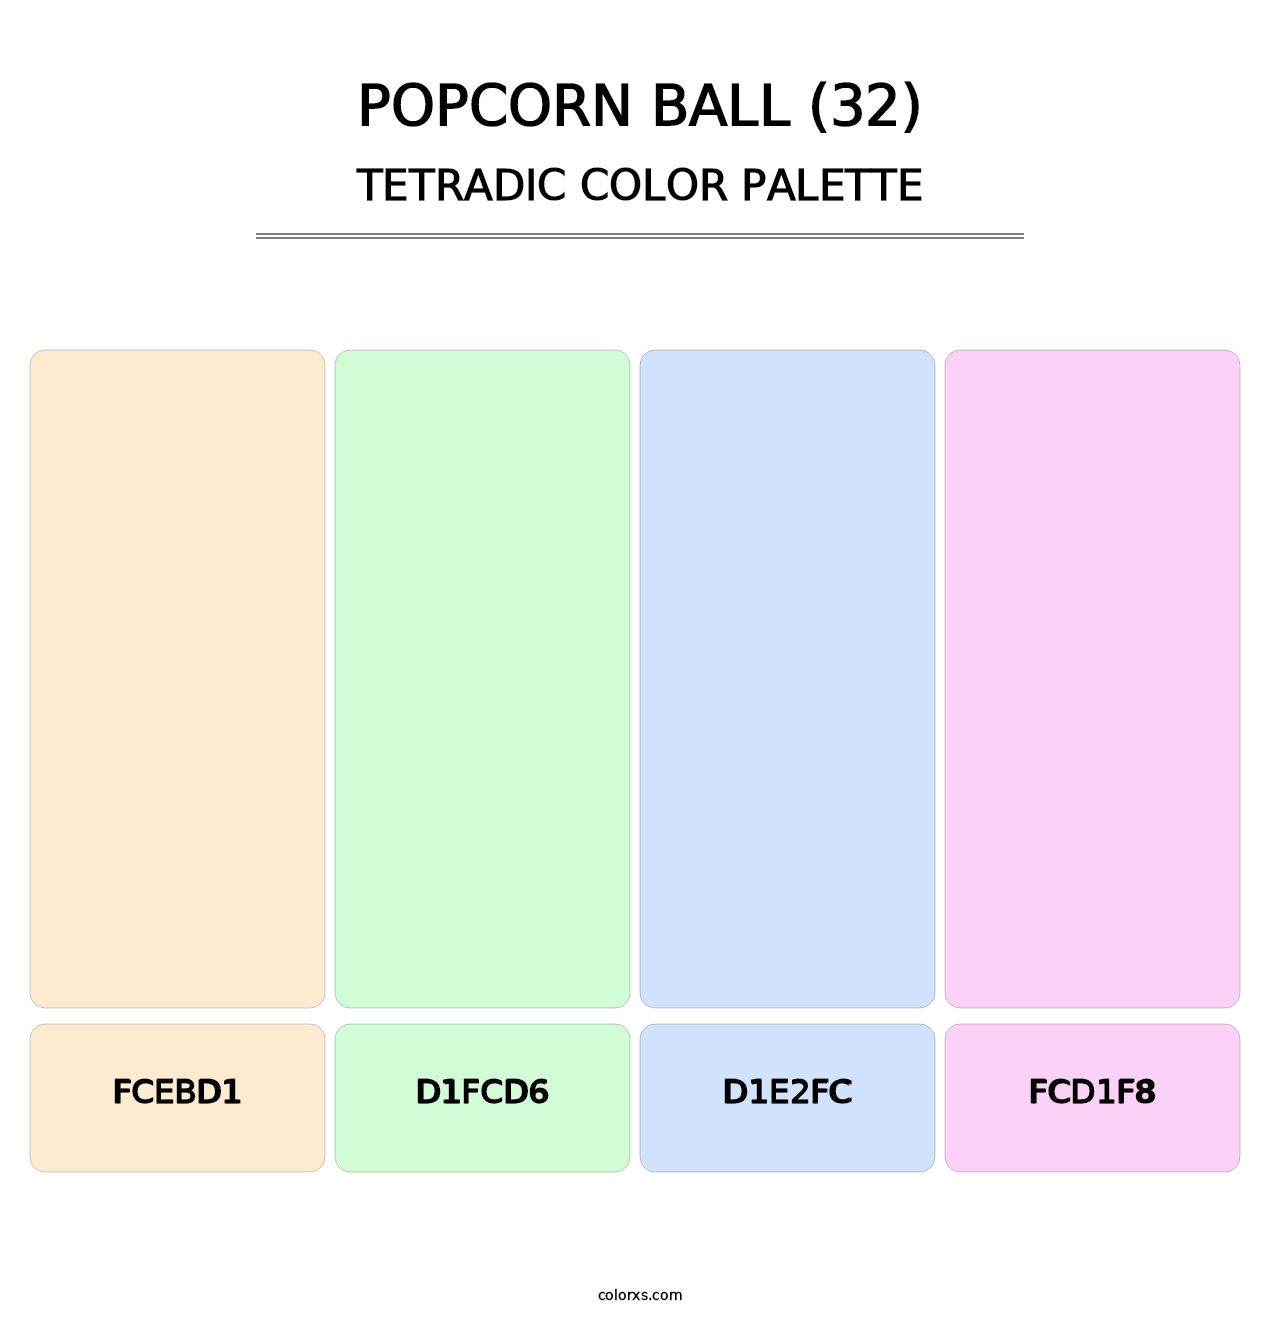 Popcorn Ball (32) - Tetradic Color Palette